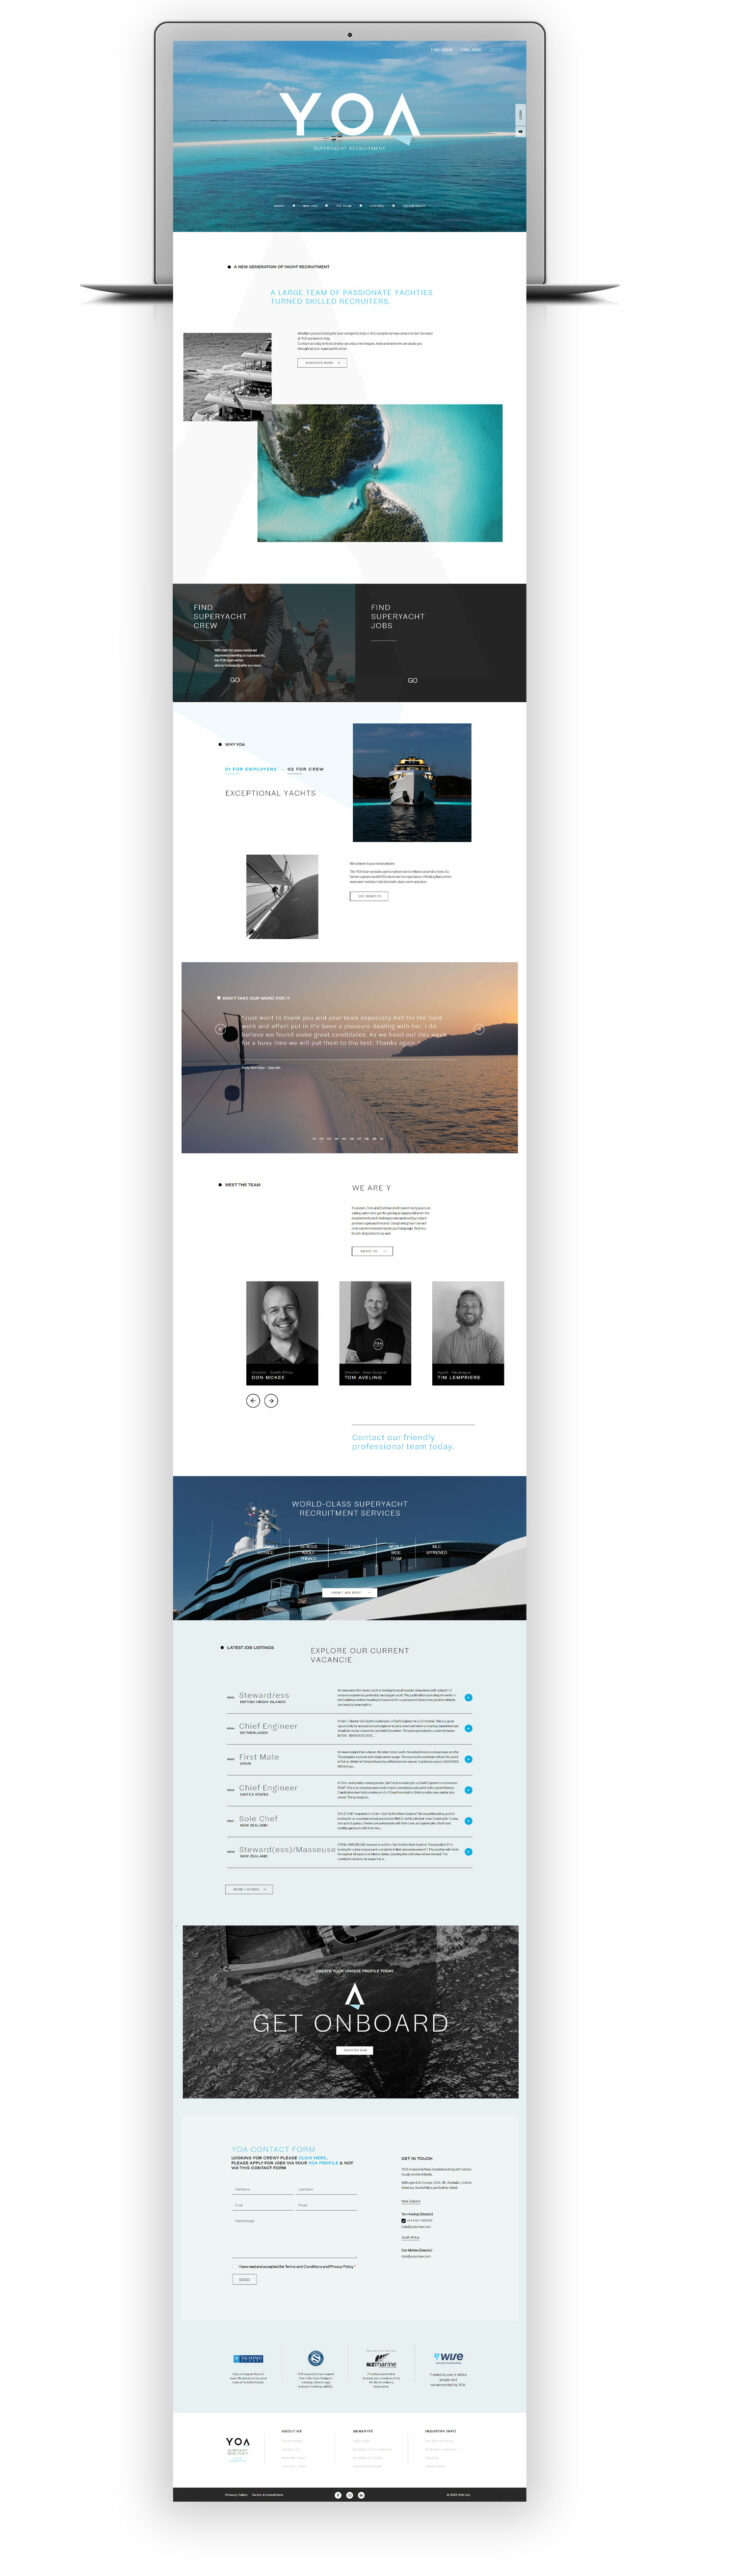 Yoa Superyacht Recruitment Homepage Design Wanaka Web Design